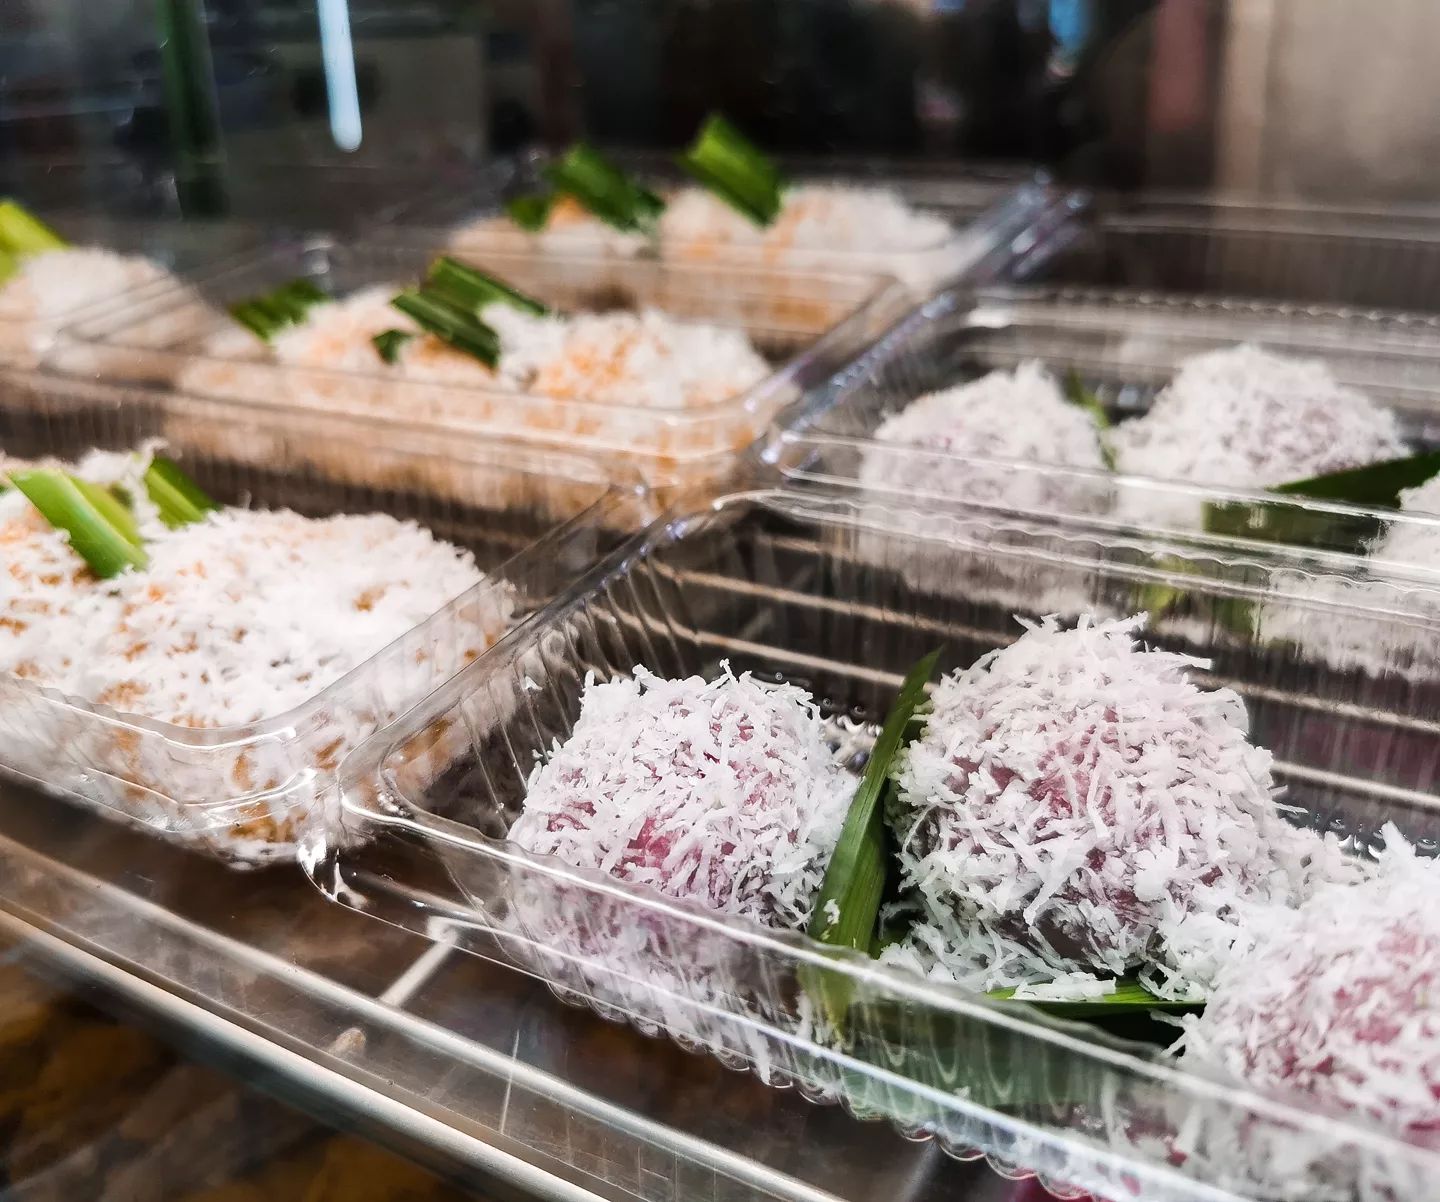 hung huat cakes & pastries - kueh